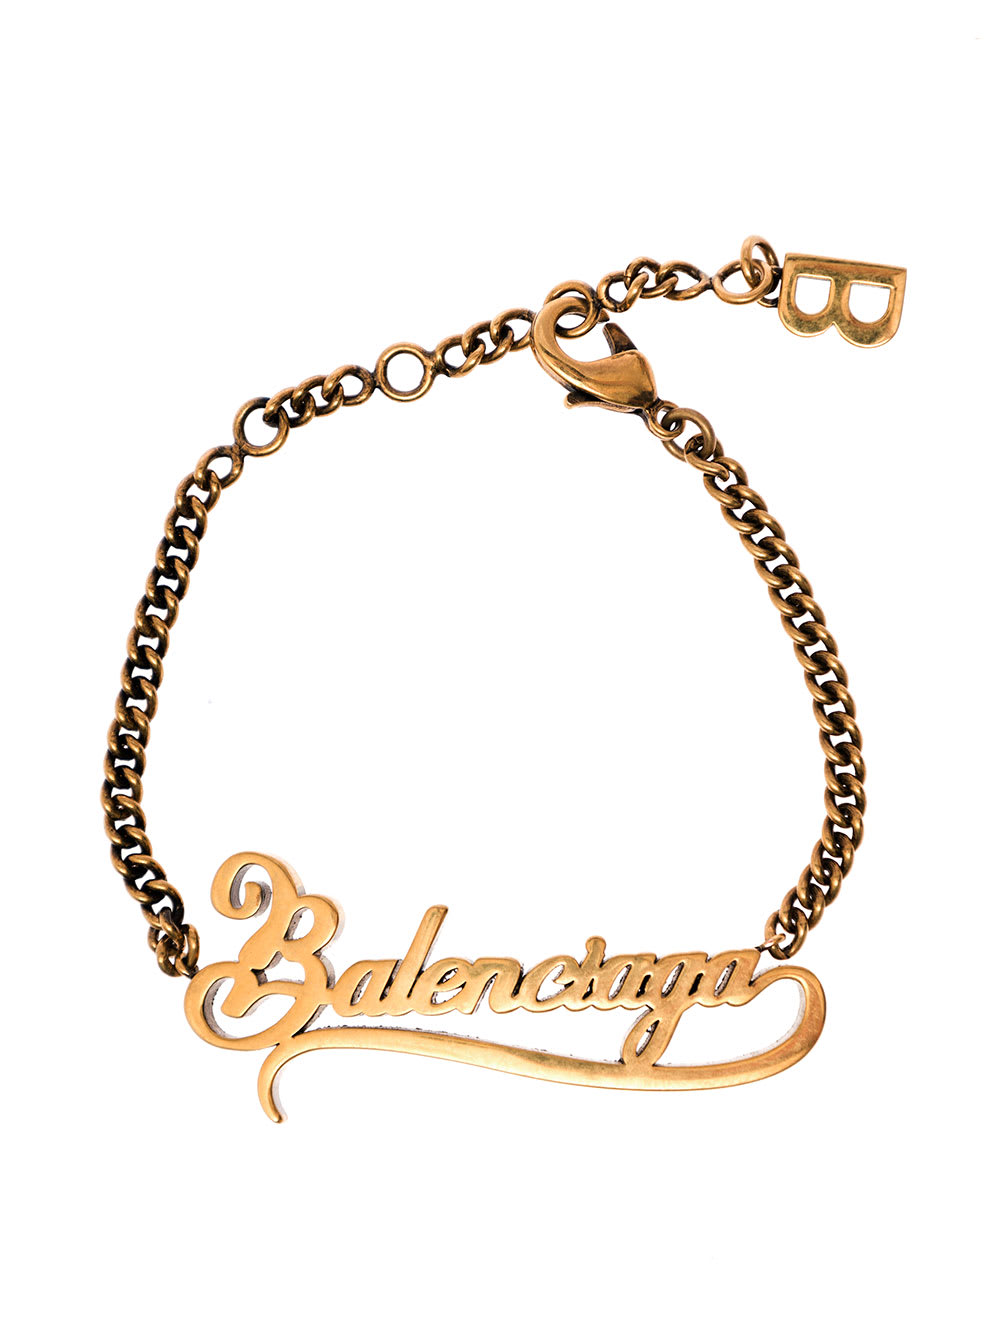 Typo Valentine Antique Brass Bracelet Balenciaga Woman